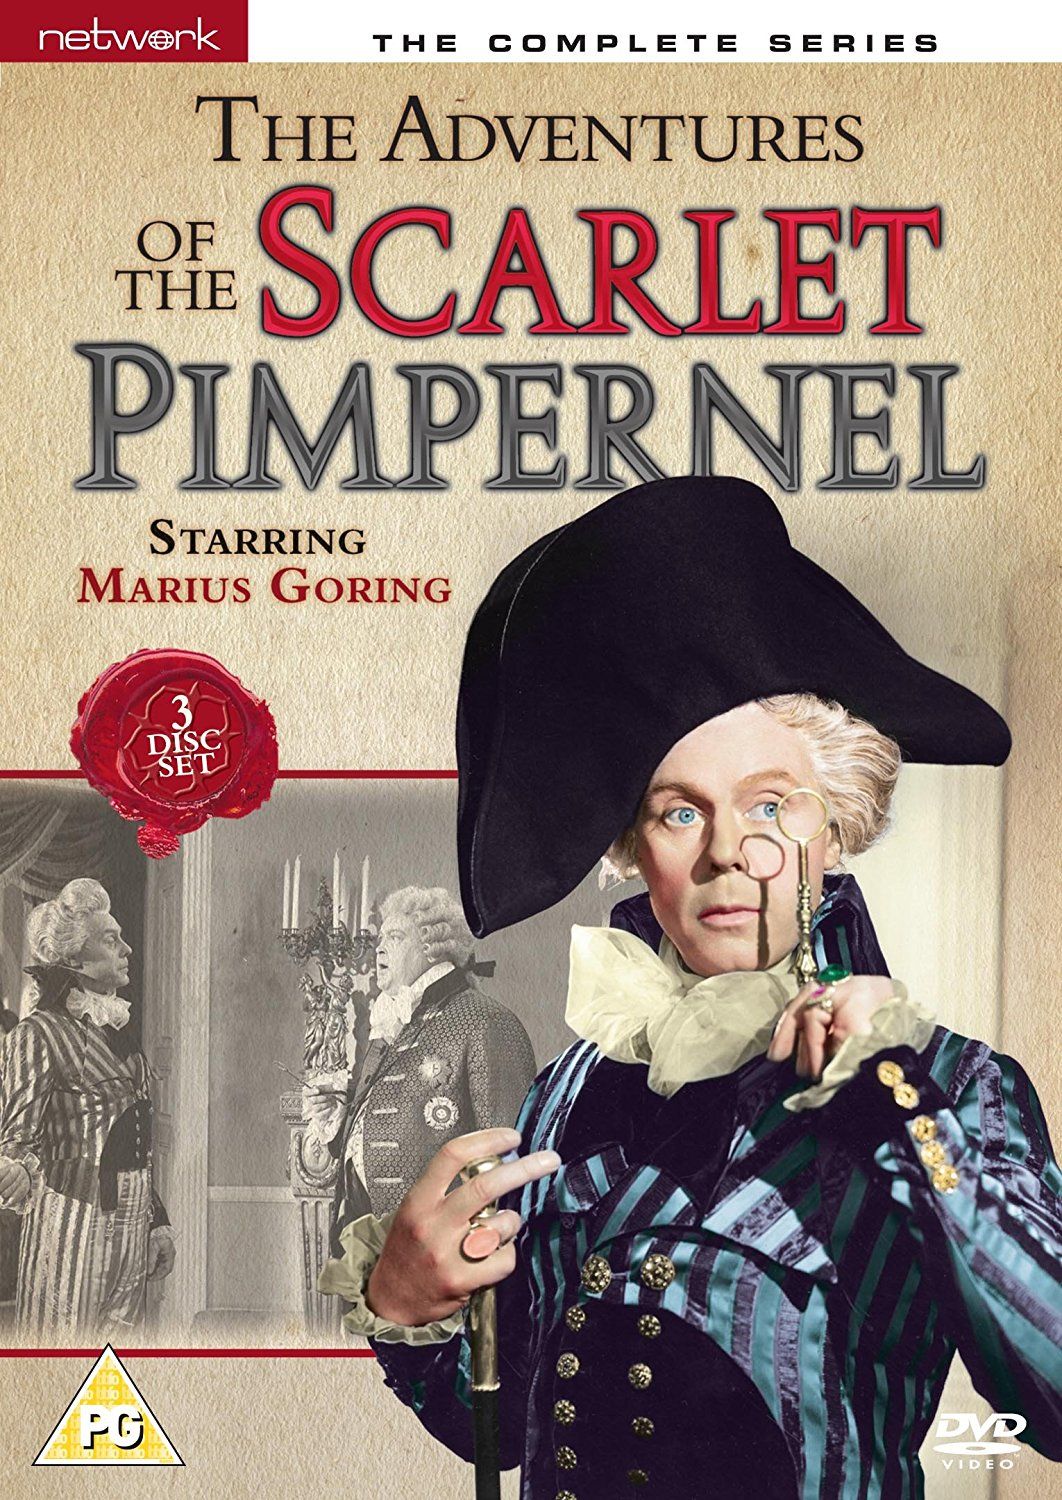 The Adventures of the Scarlet Pimpernel ne zaman